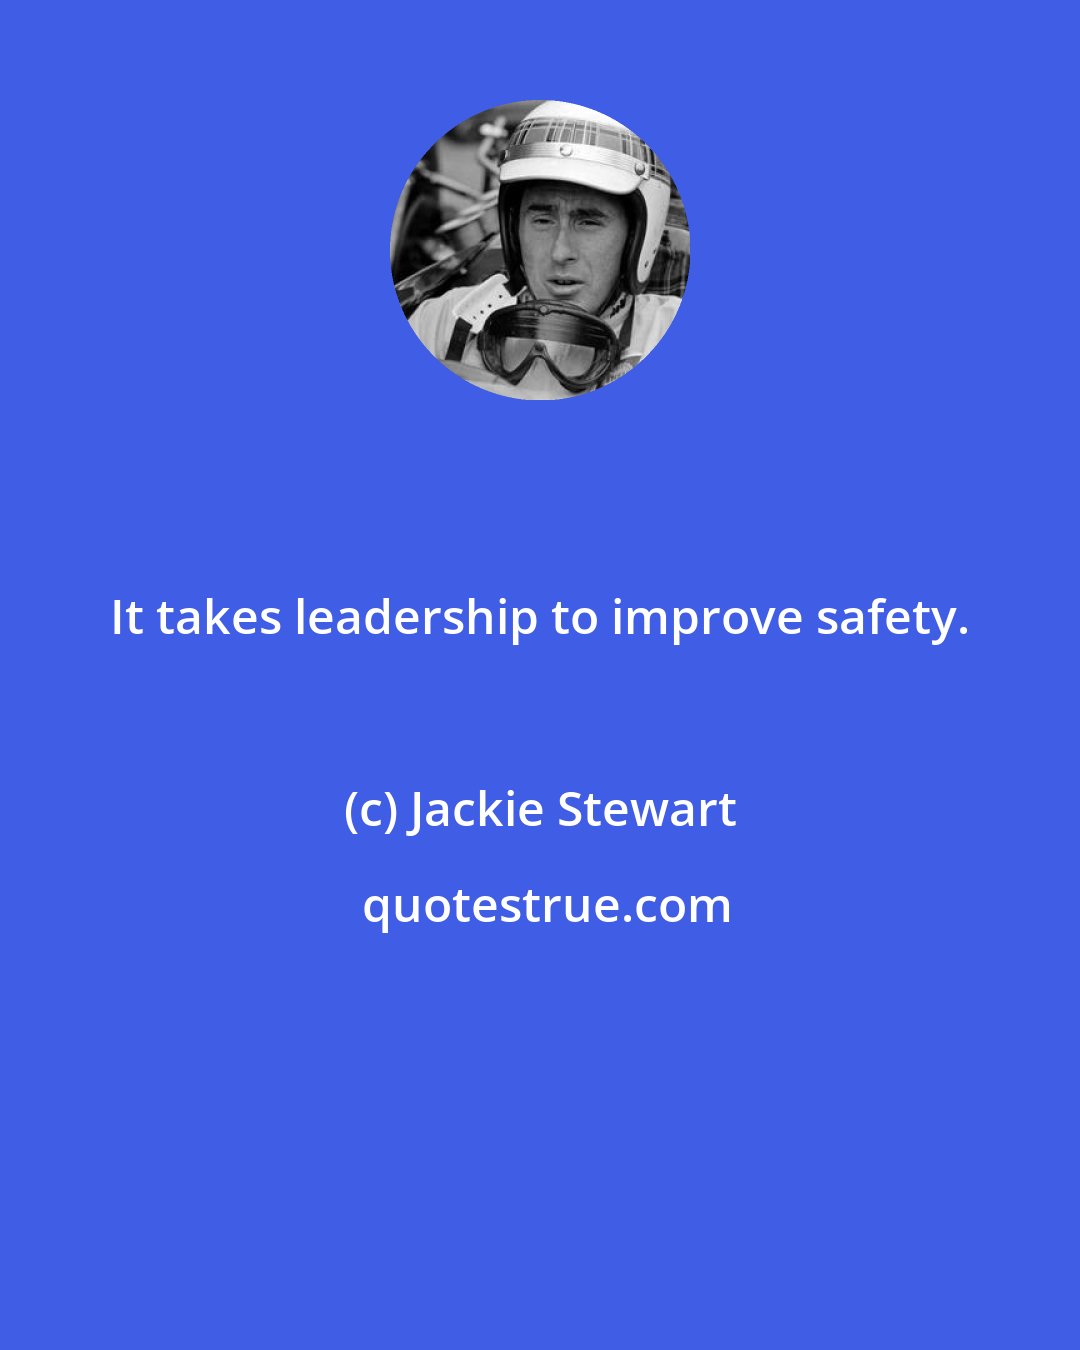 Jackie Stewart: It takes leadership to improve safety.